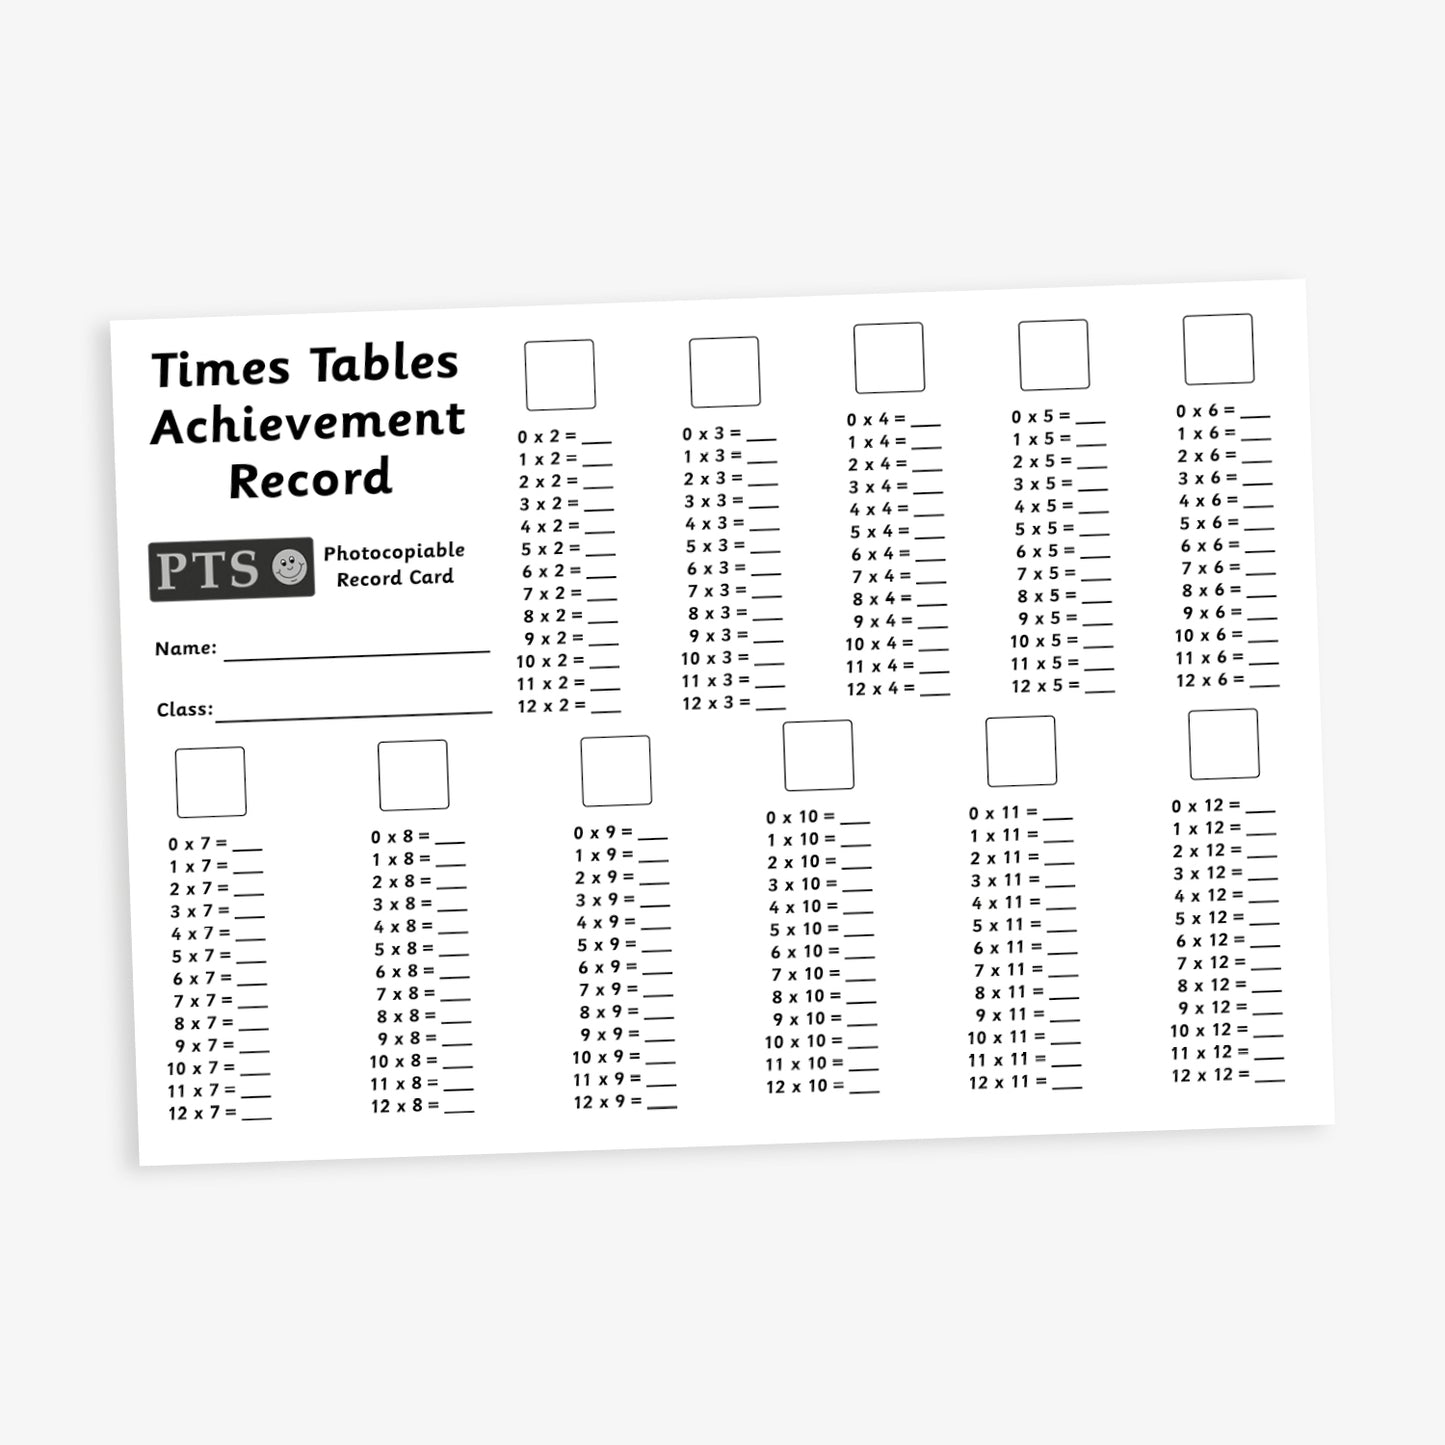 Times Tables Achievement Record